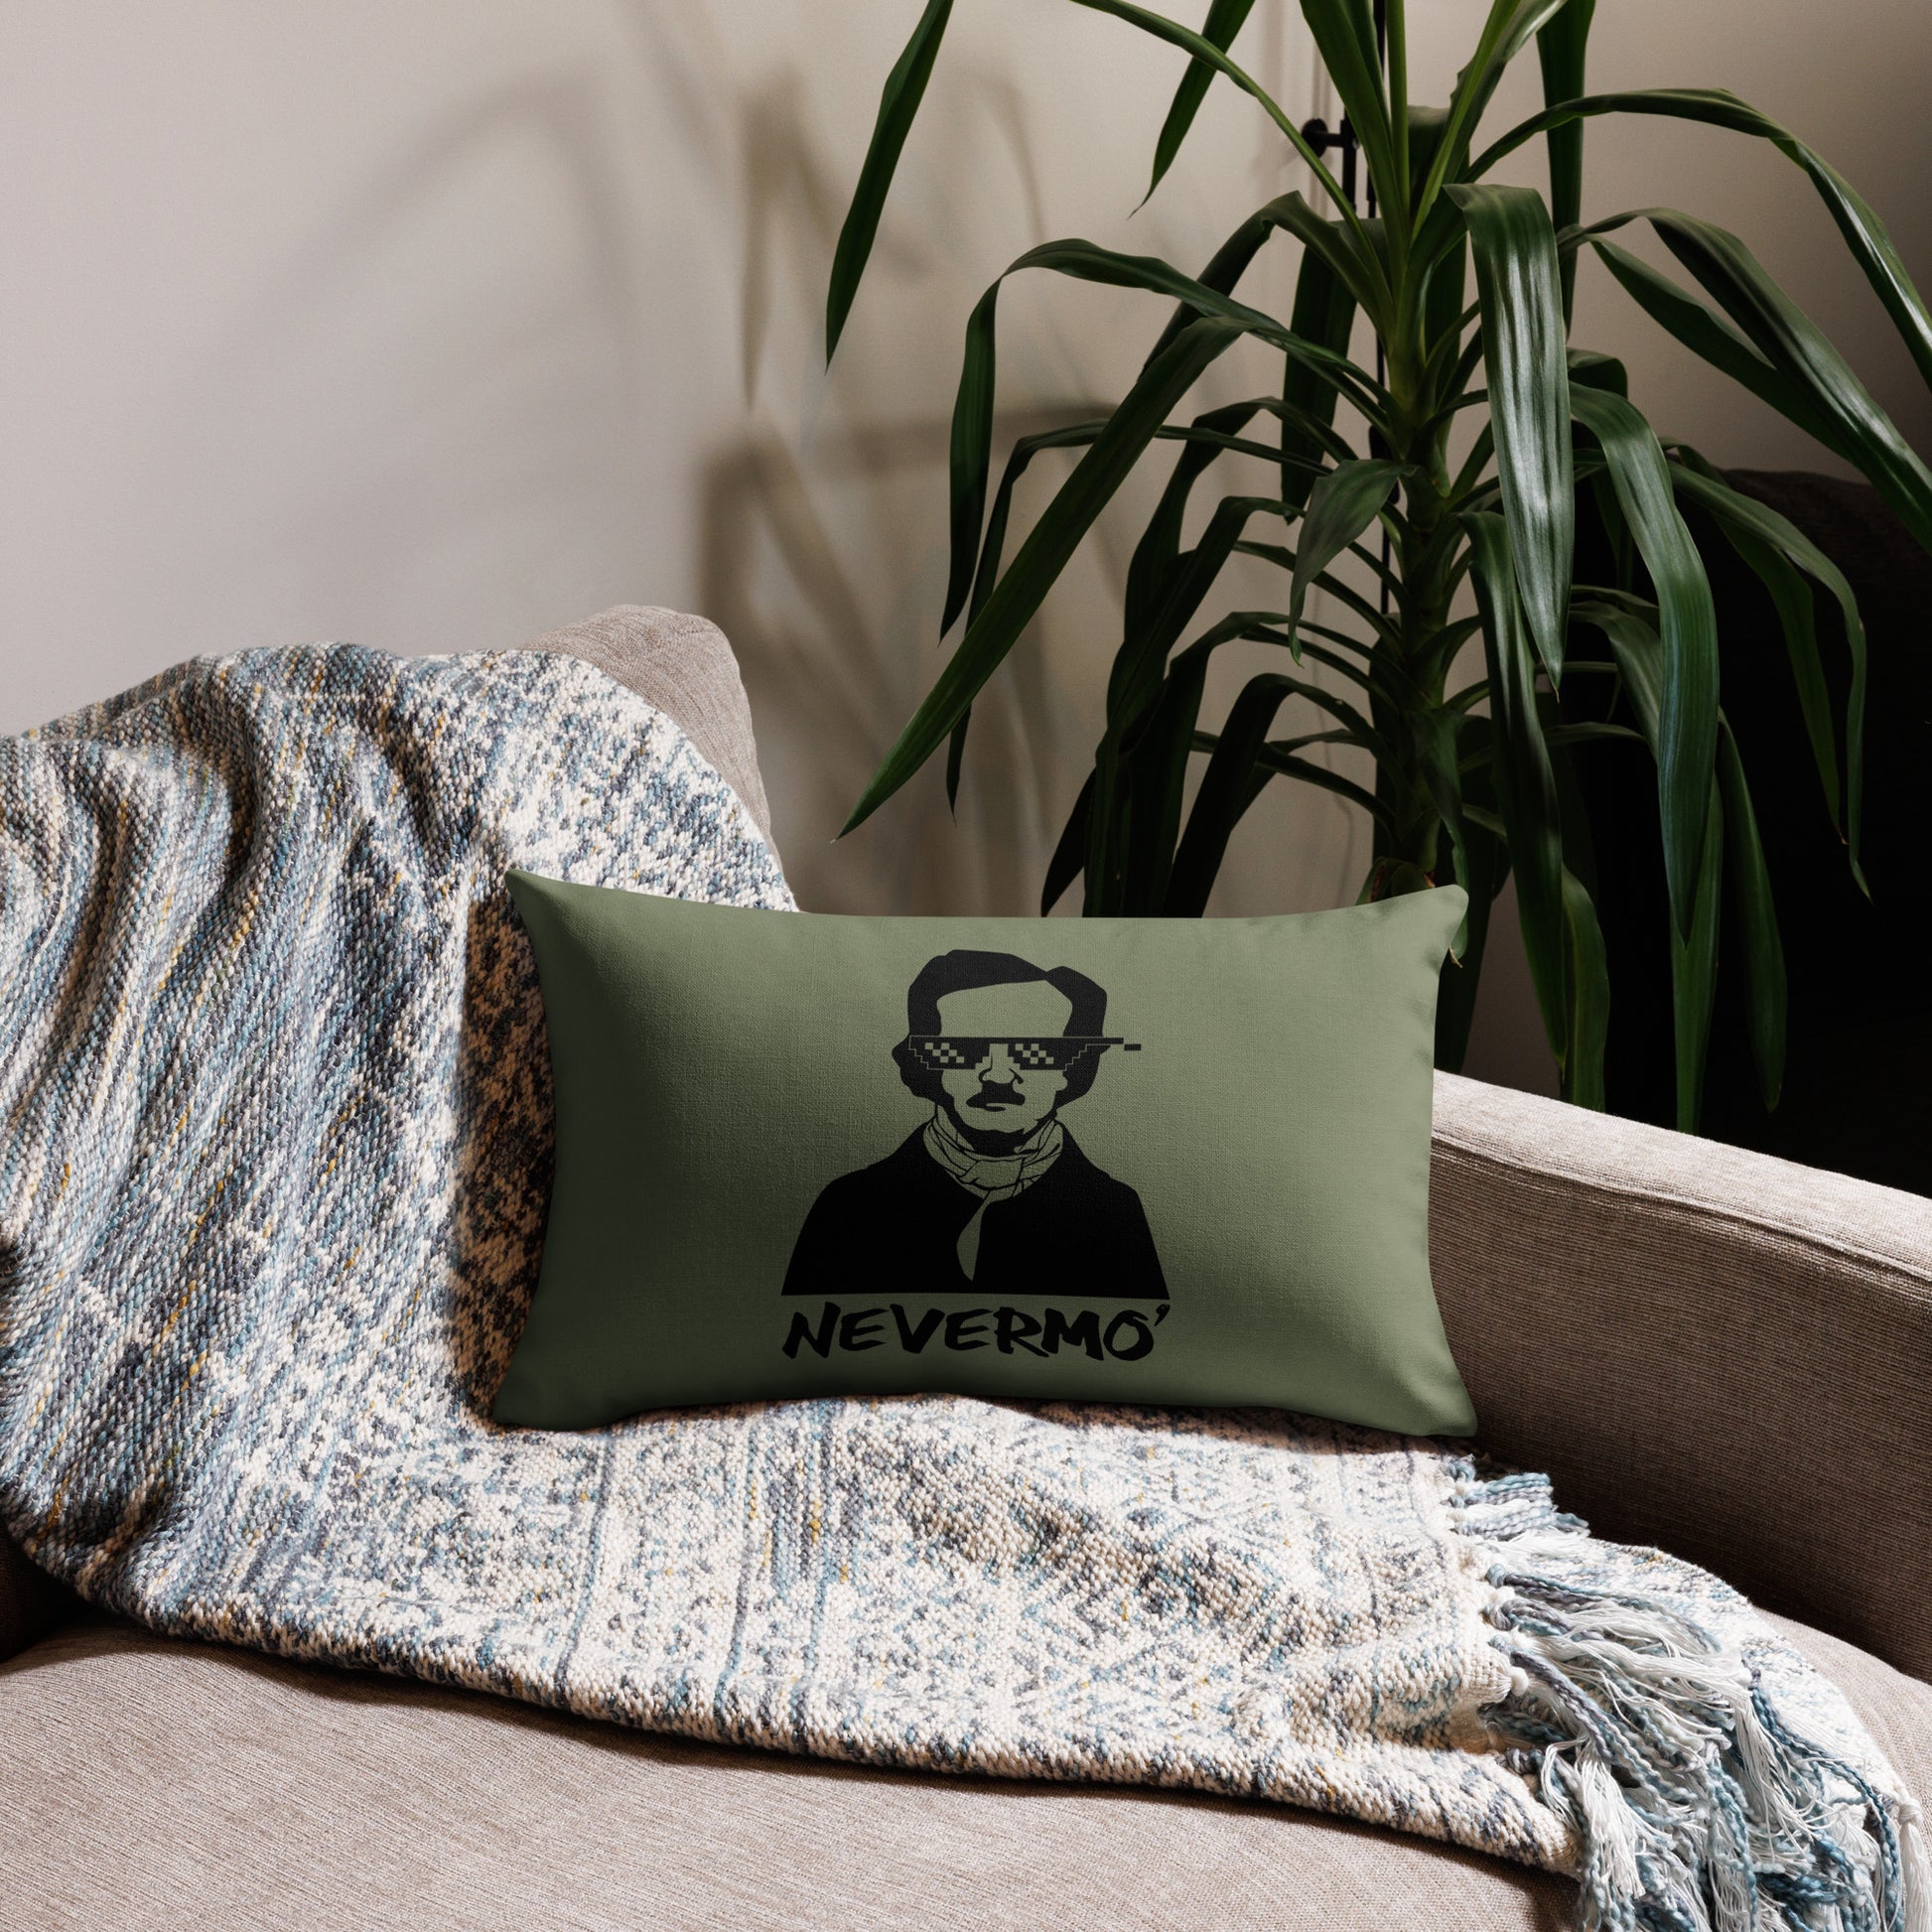 Edgar Allan Poe "I'm Sexy and a Poet" Premium Pillow - Green 20 x 12